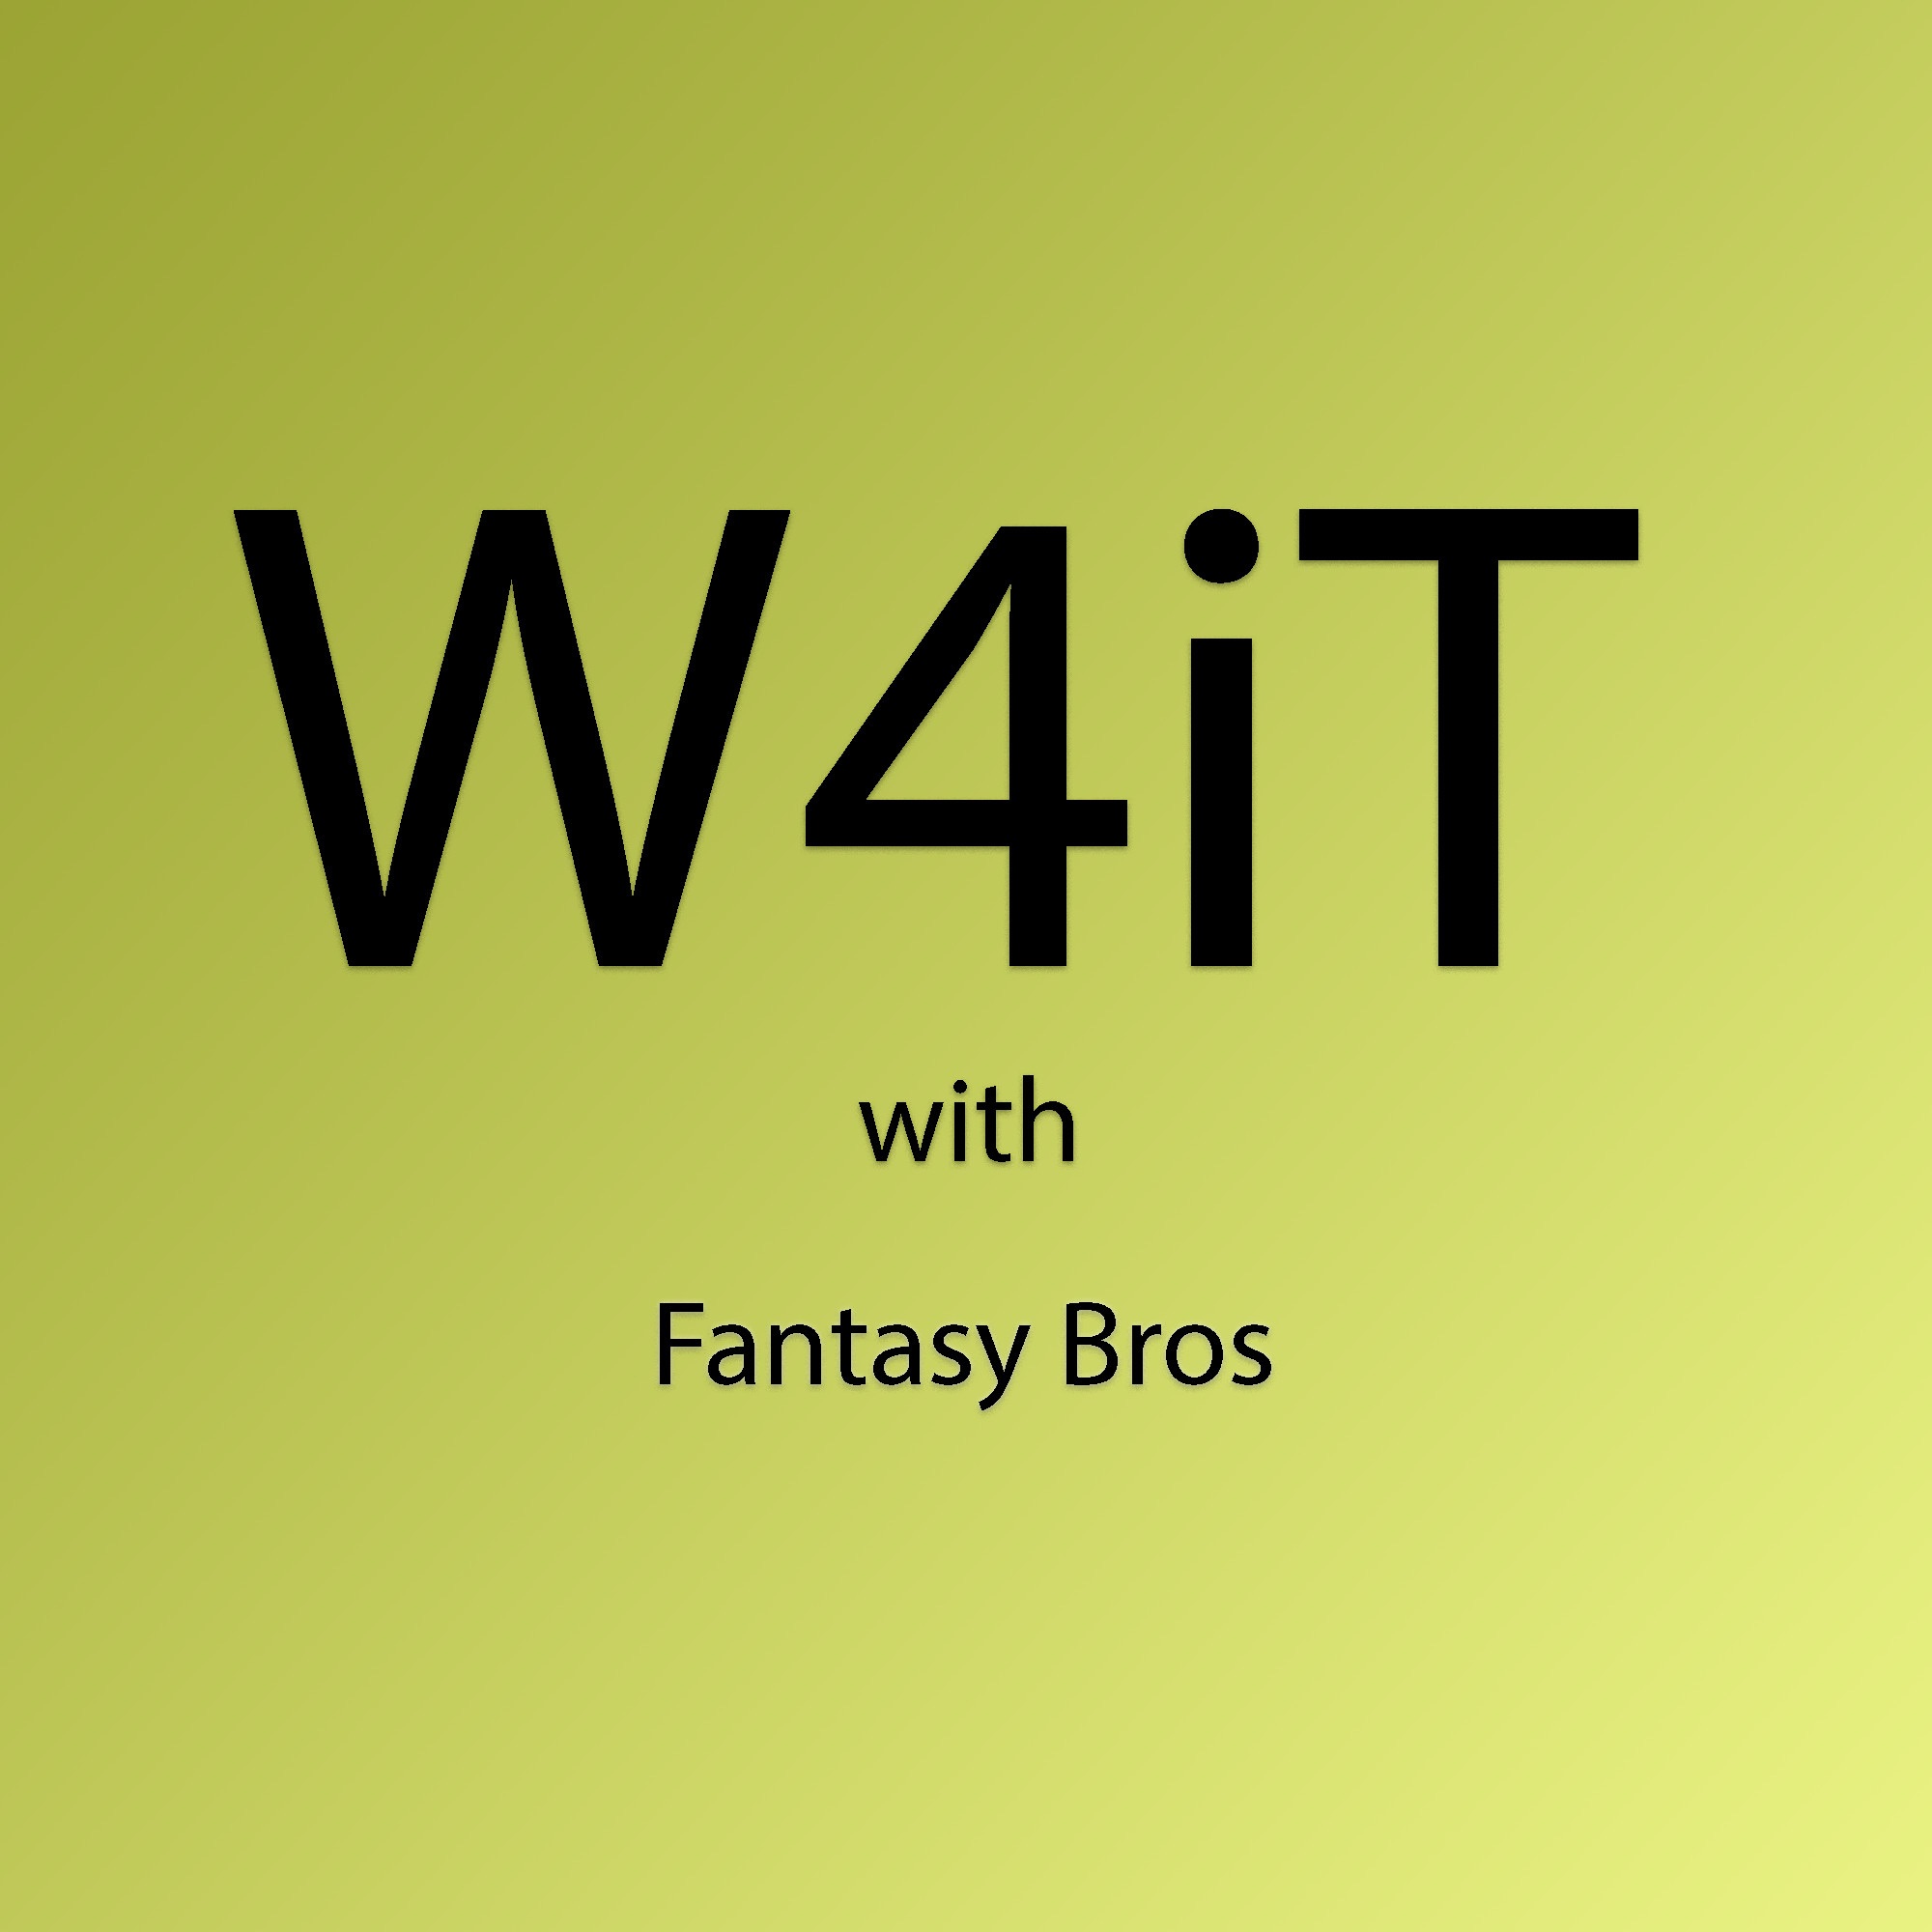 W4it Fantasy Bros